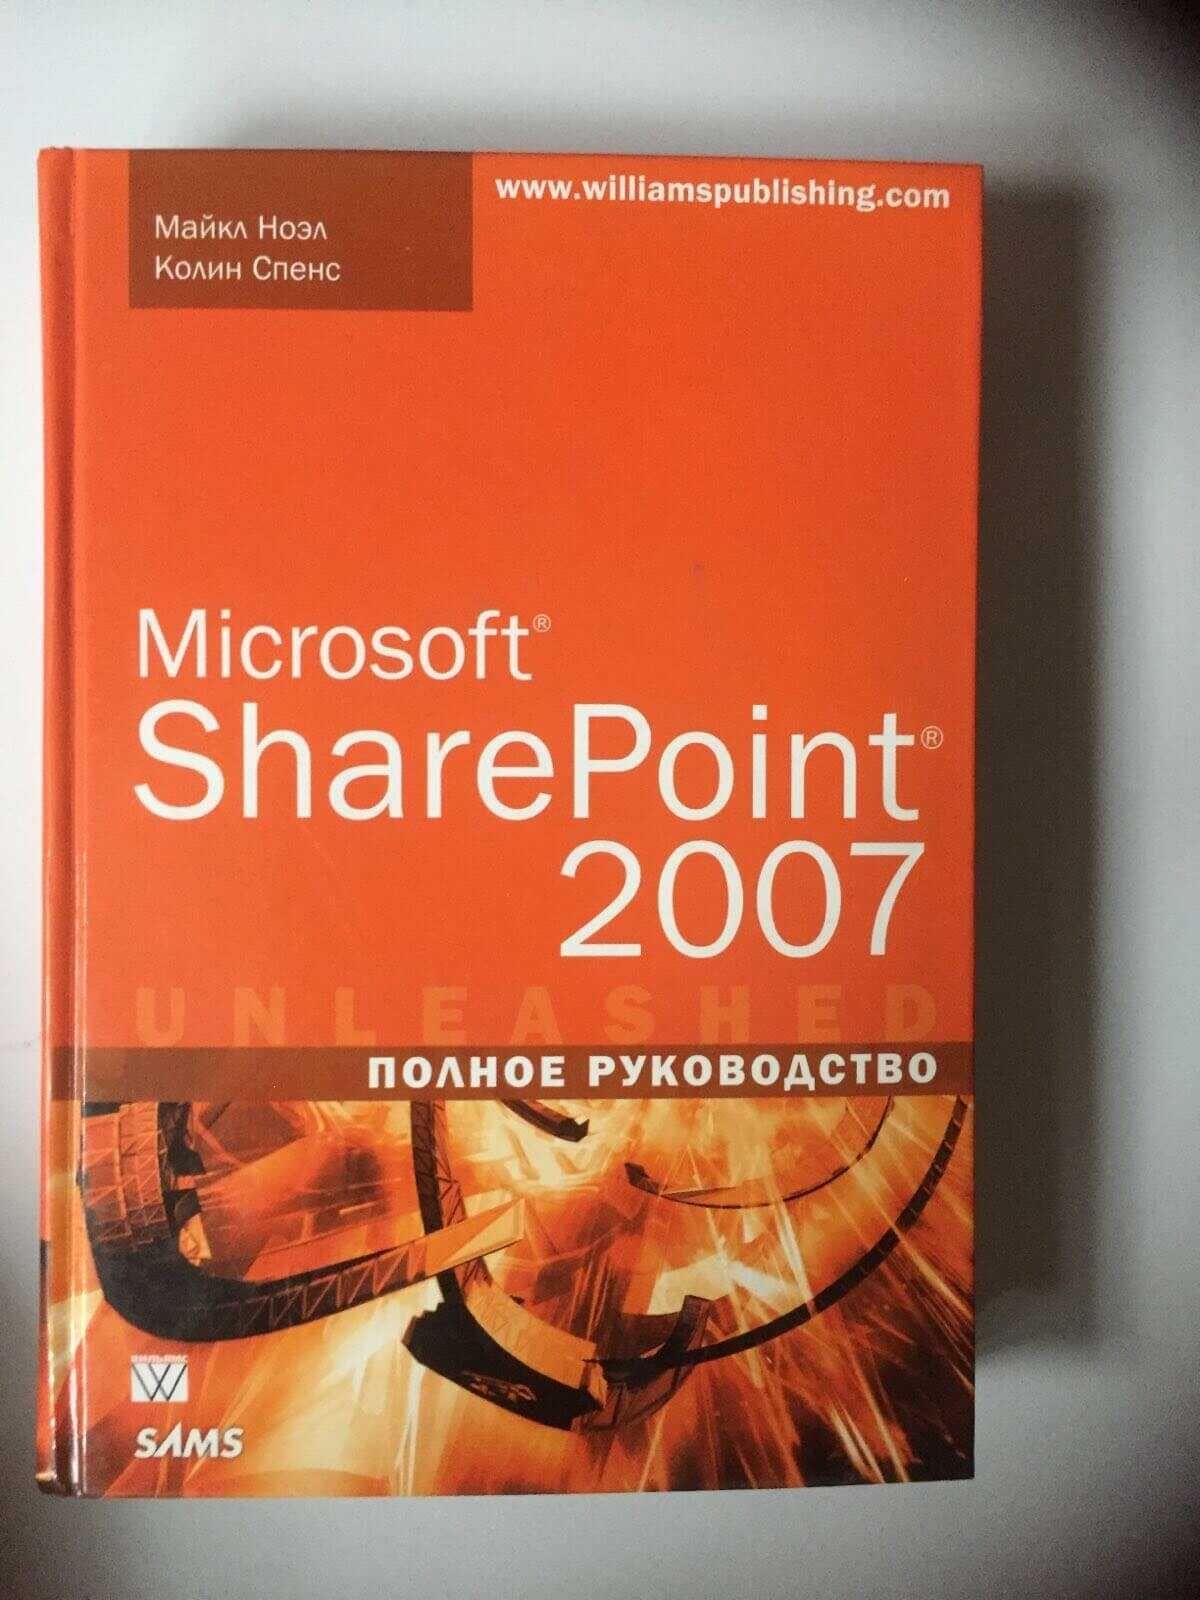 "Microsoft SharePoint 2007. Полное руководство", б/у